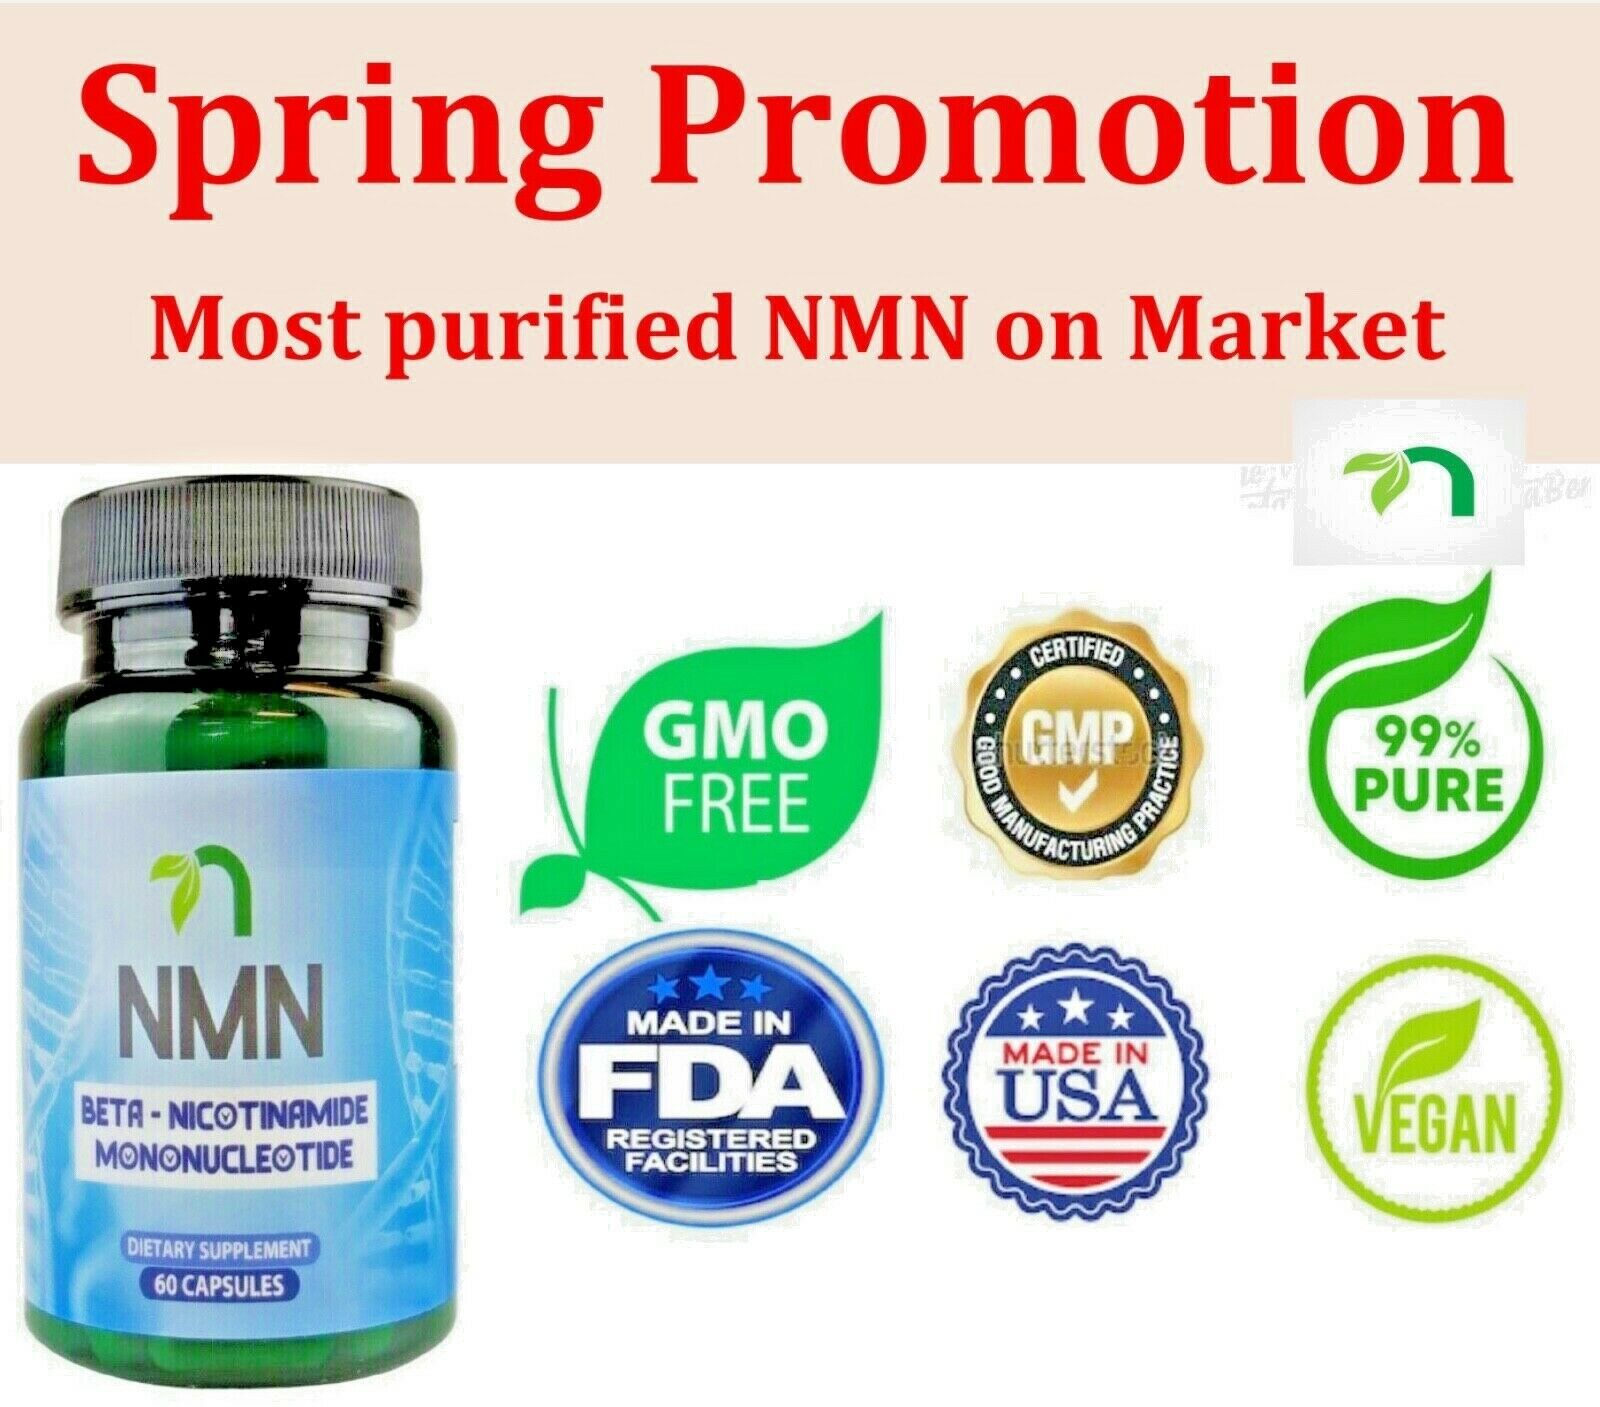 Nmn β-nicotinamide Mononucleotide Pure Potency 500mg / Serve, 60 Capsules, Nad+